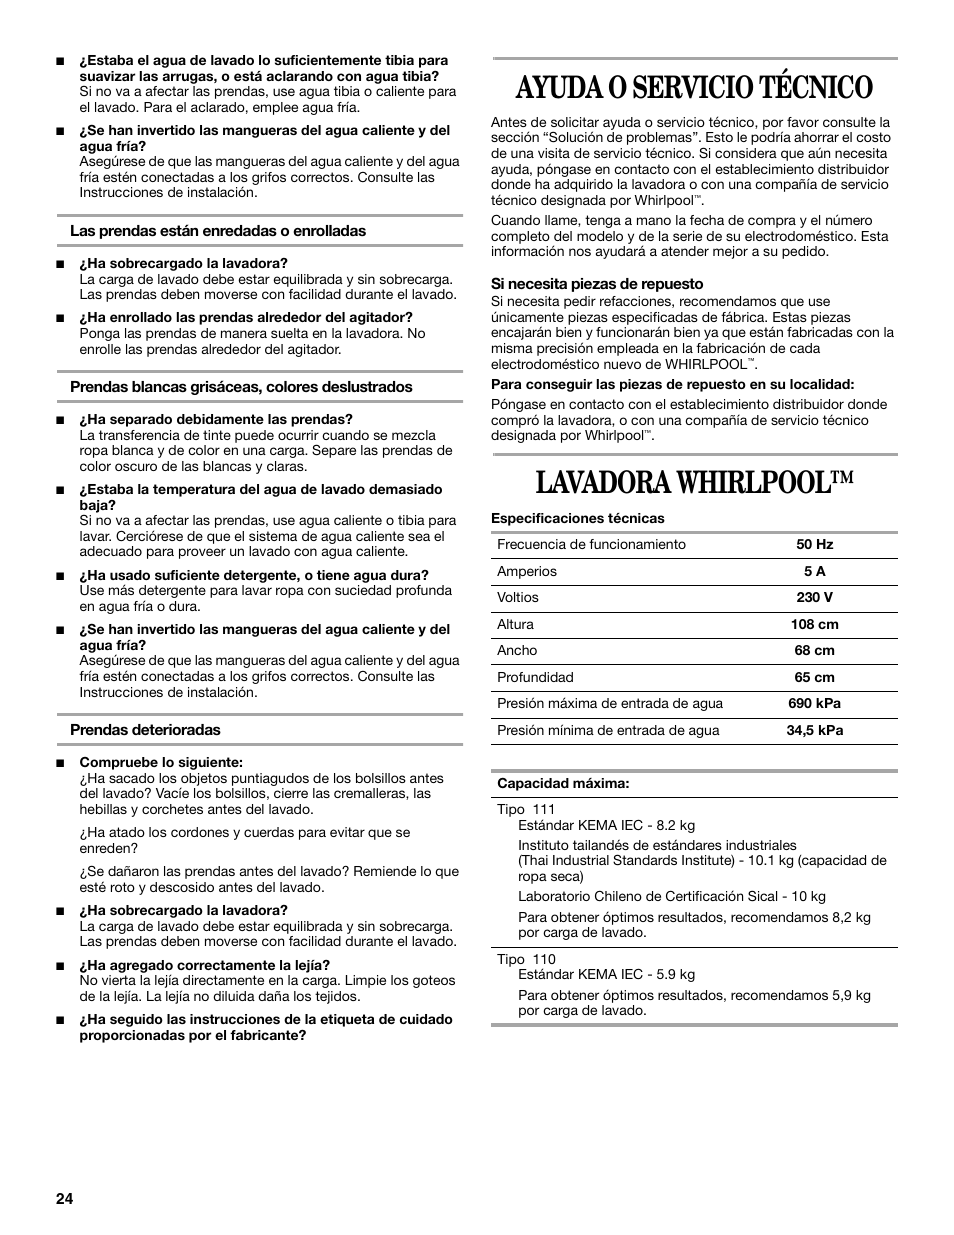 Ayuda o servicio técnico, Lavadora whirlpool | Whirlpool 3XWTW5705 User  Manual | Page 24 / 36 | Original mode